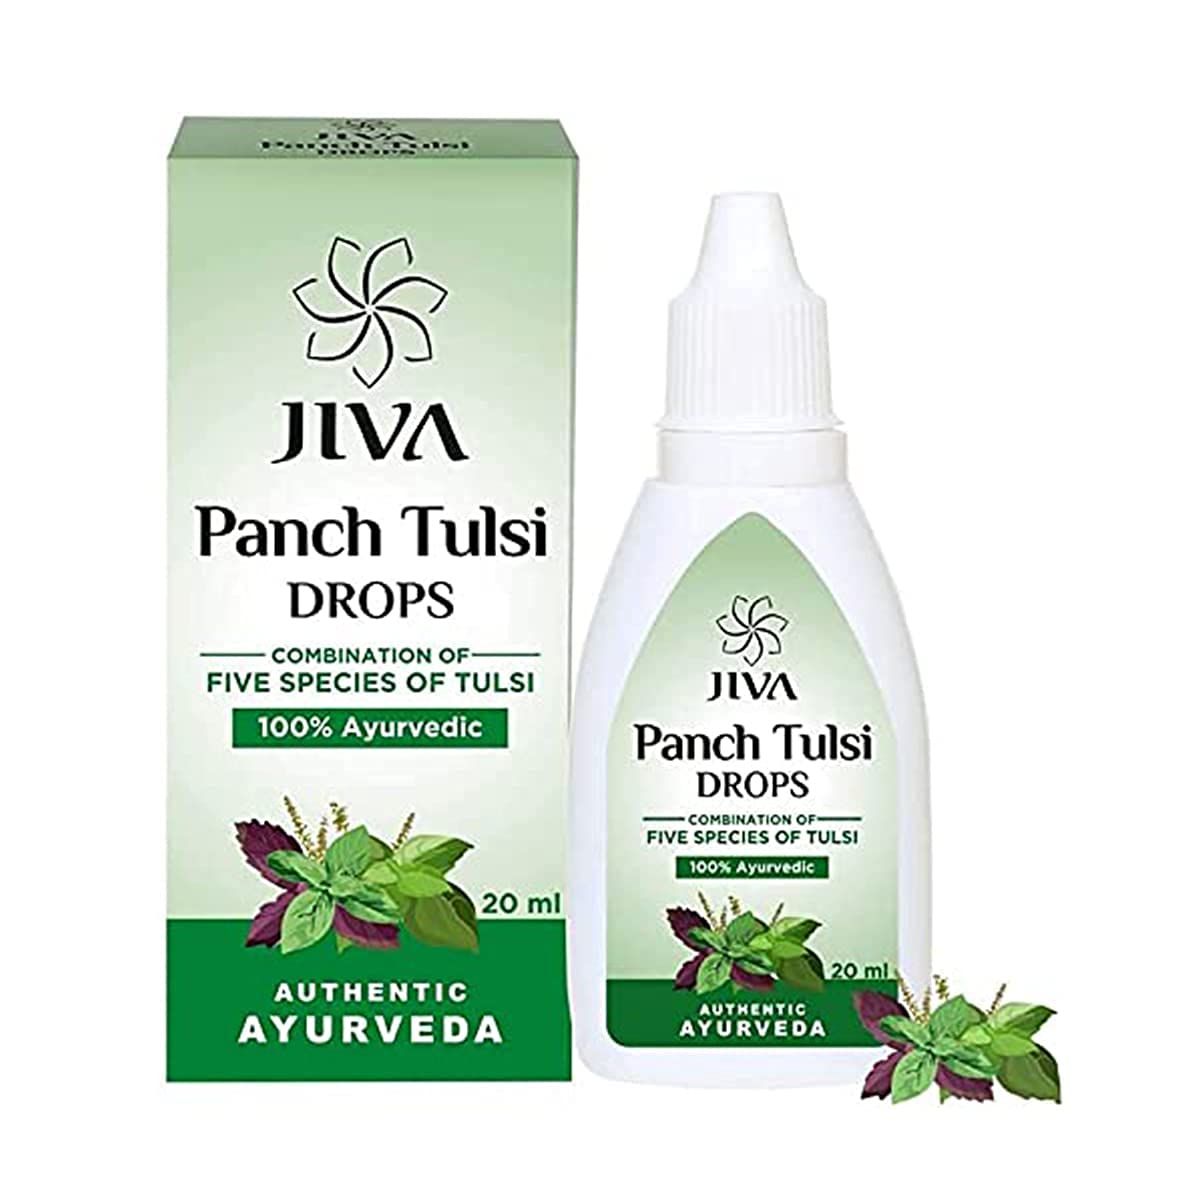 Buy Jiva Ayurveda Panch Tulsi Drops at Best Price Online